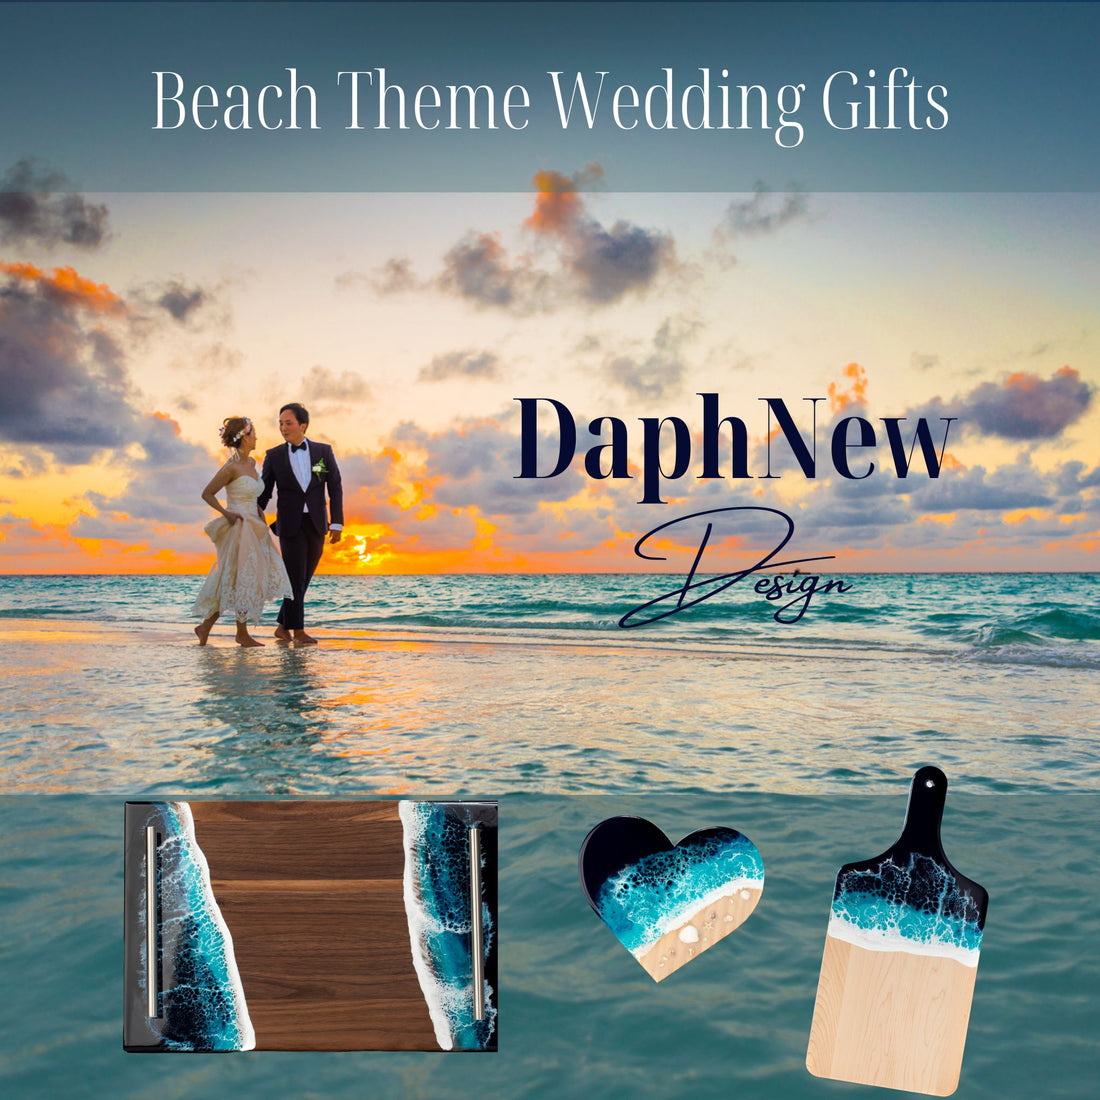 Beach Theme Wedding Gifts: Celebrate Love with a Splash!